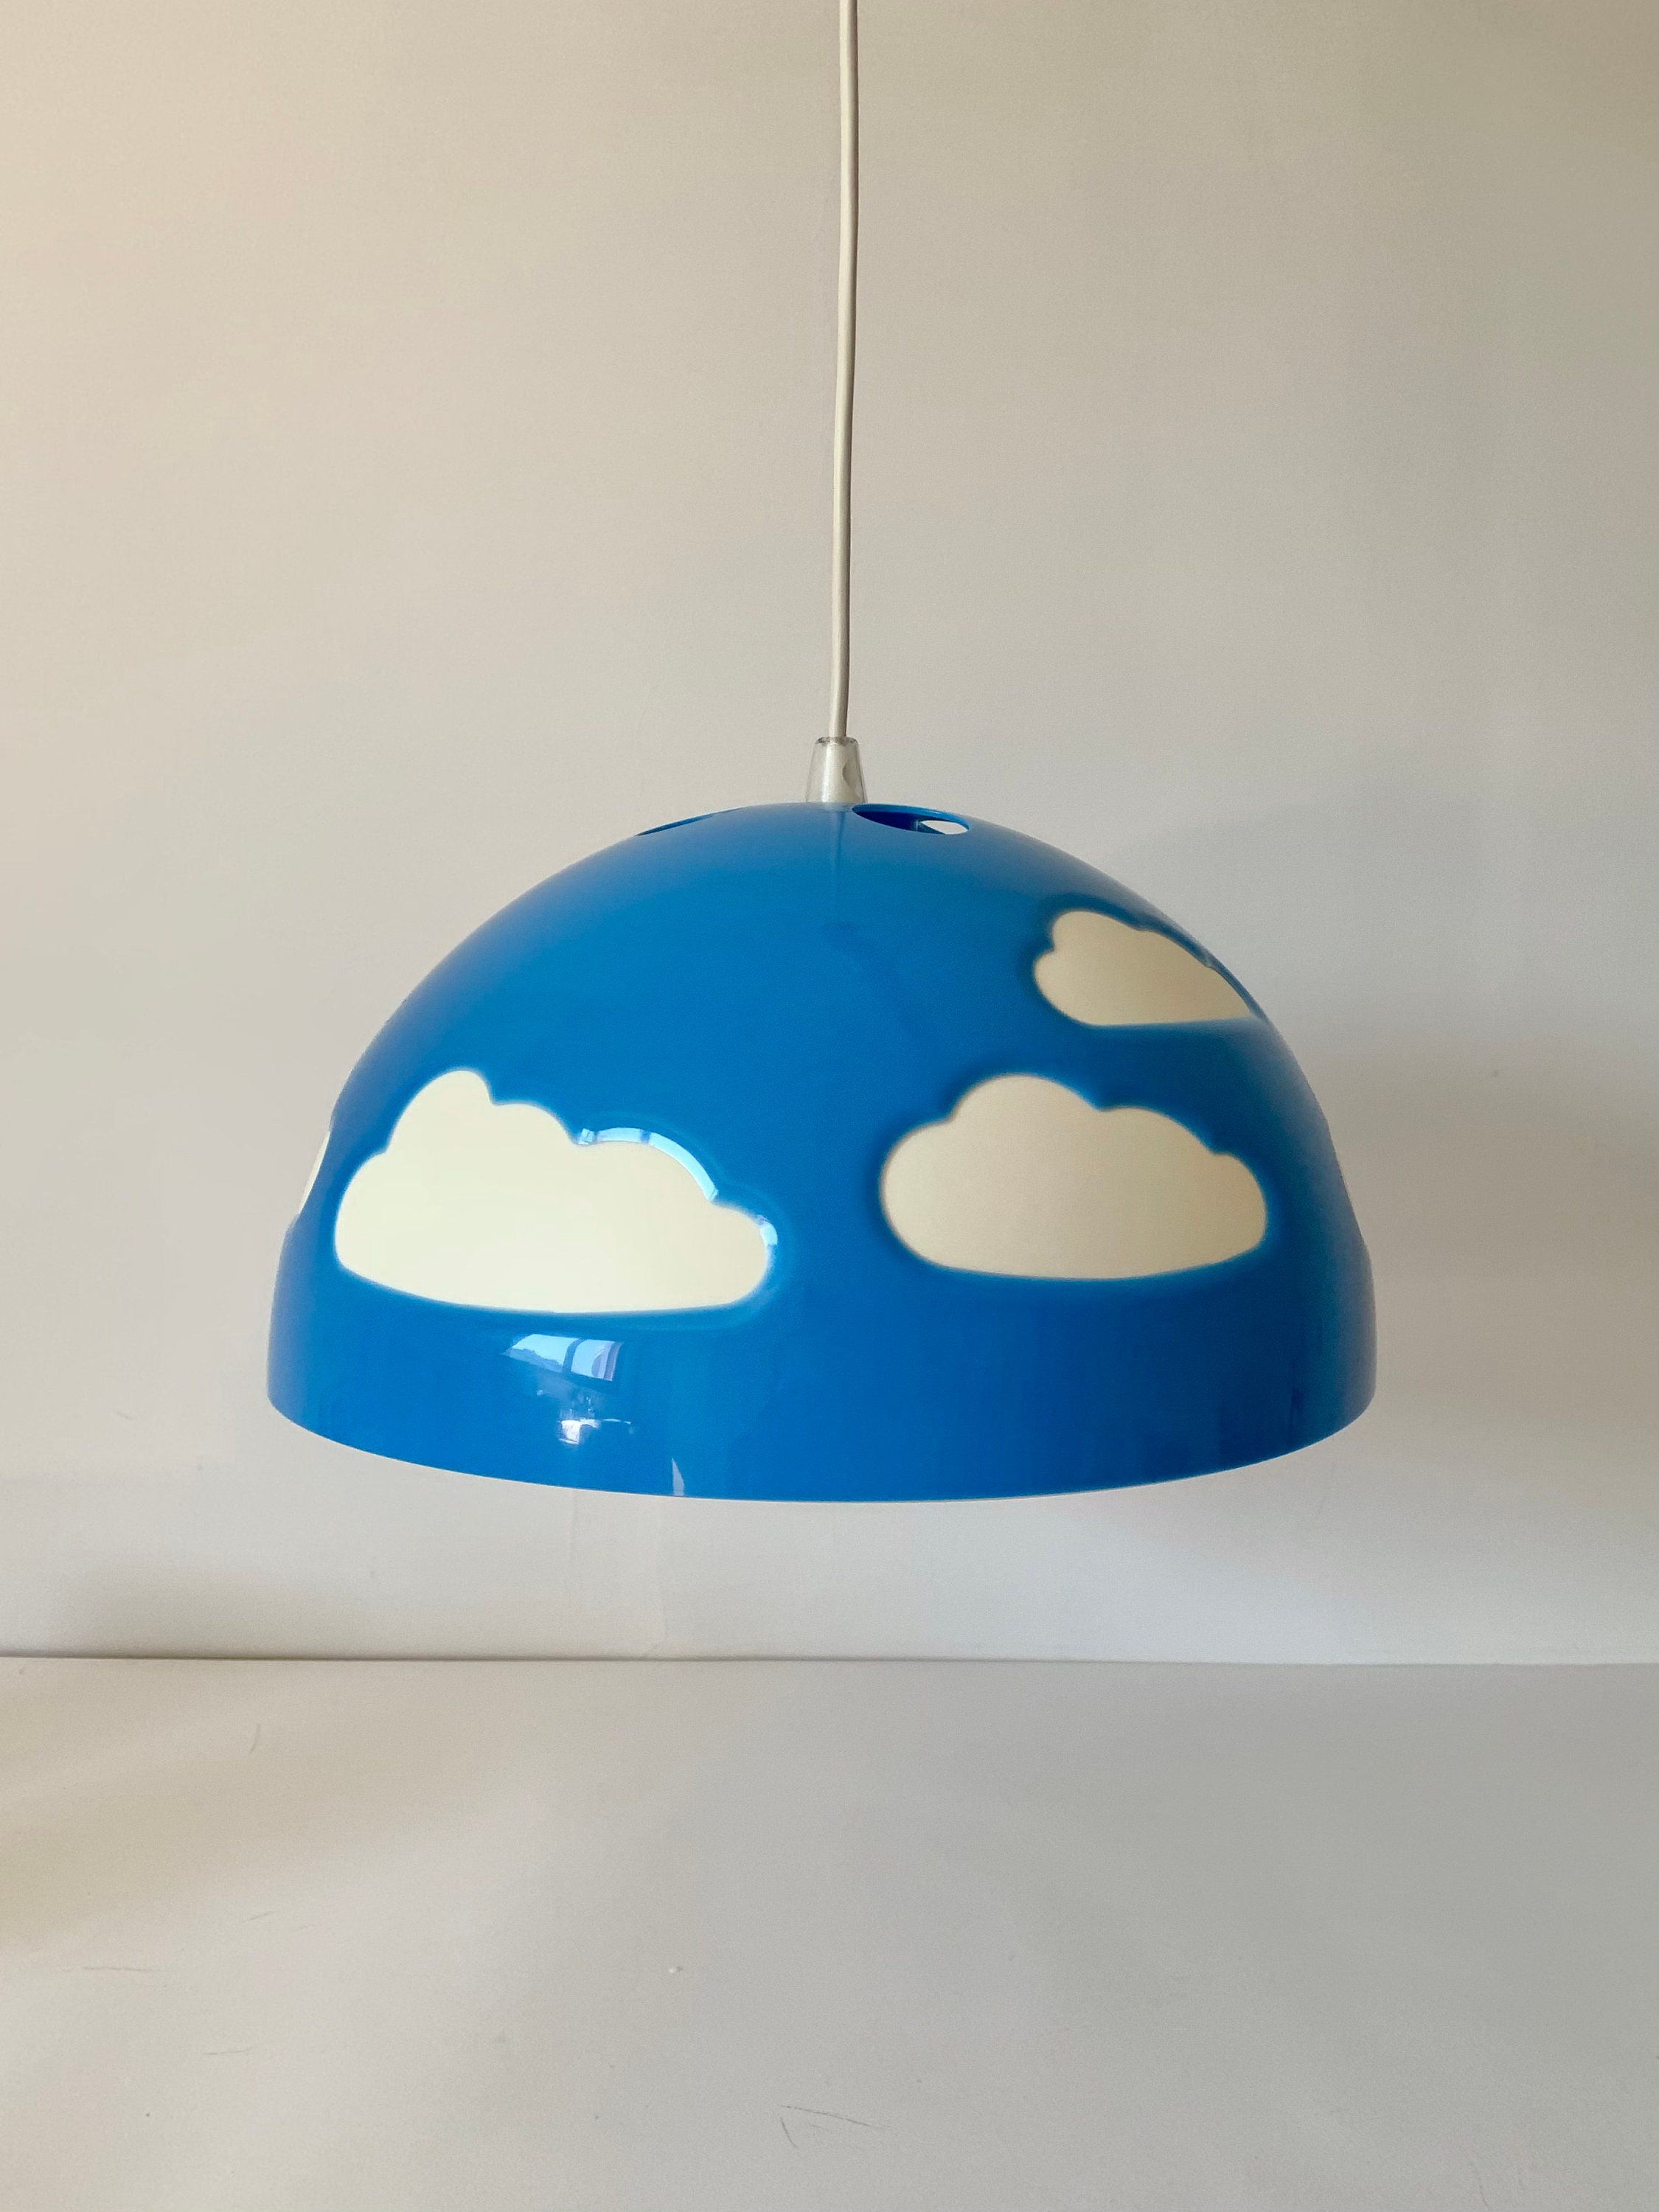 Ikea Knappa pendant light - retro style for under £15 - Retro to Go